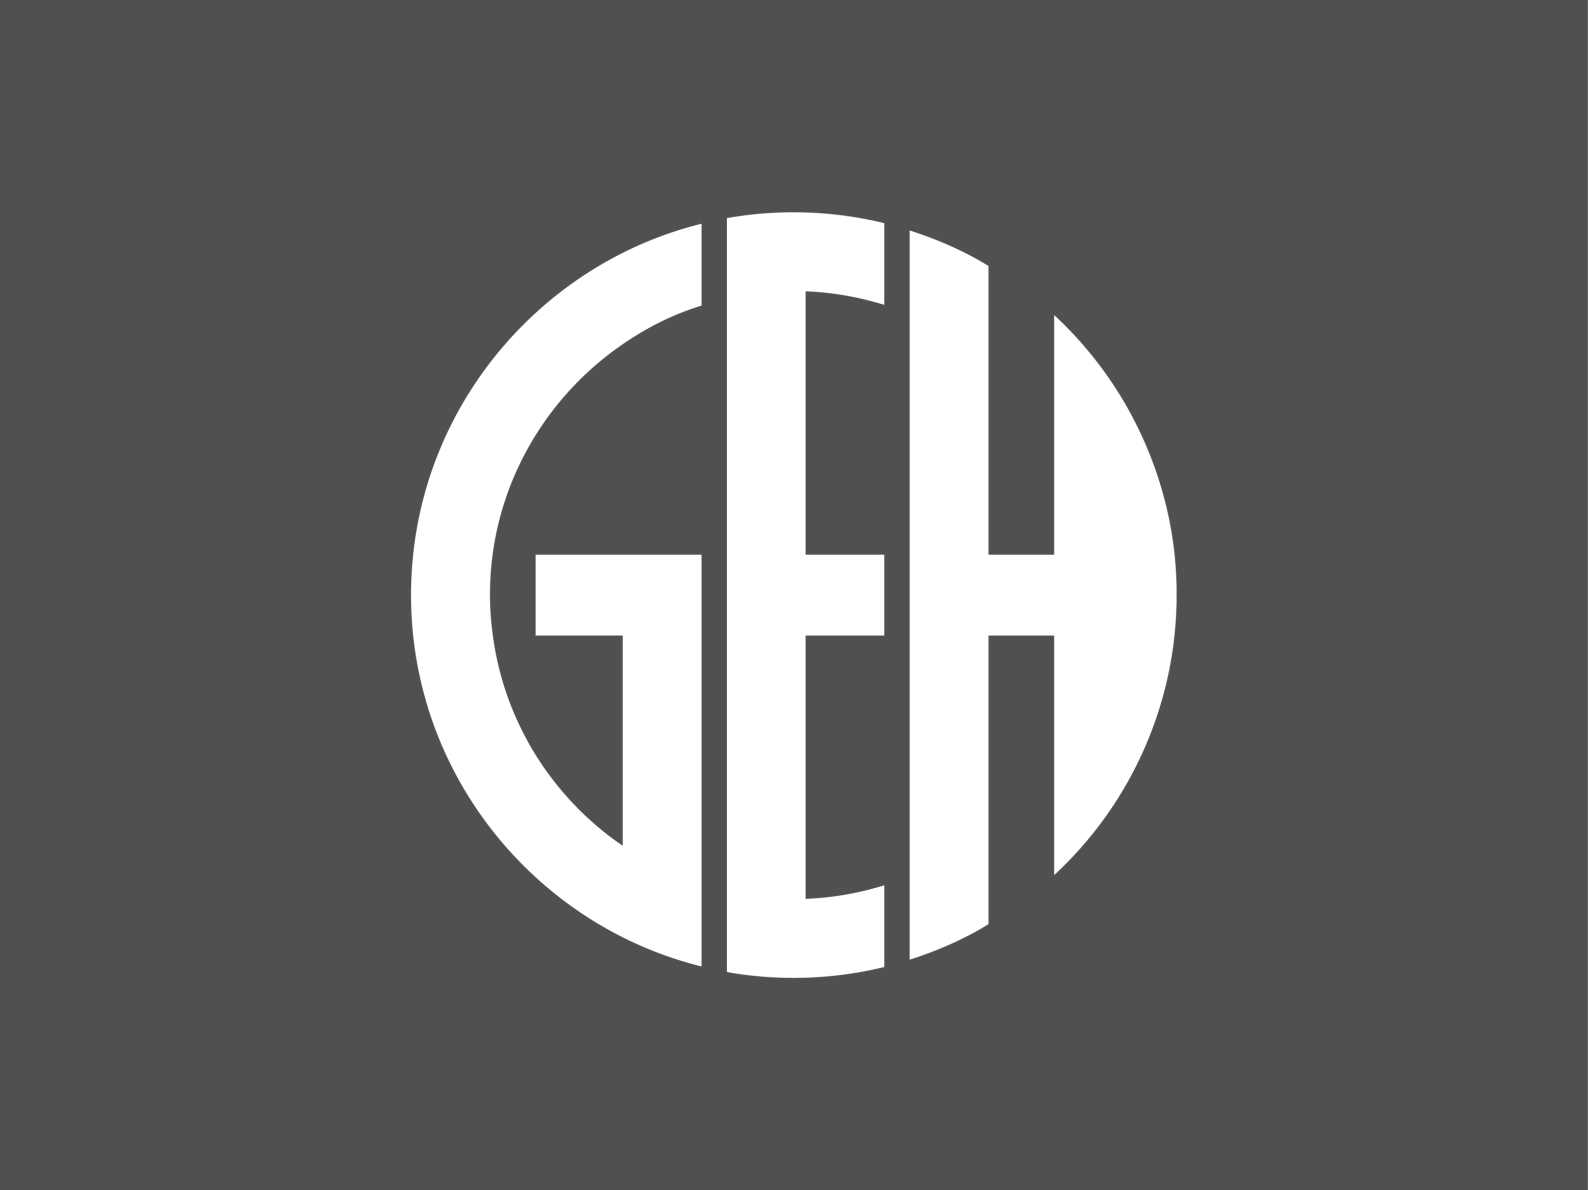 GEH Monogram concept logo. by Md Hasanul Karim on Dribbble